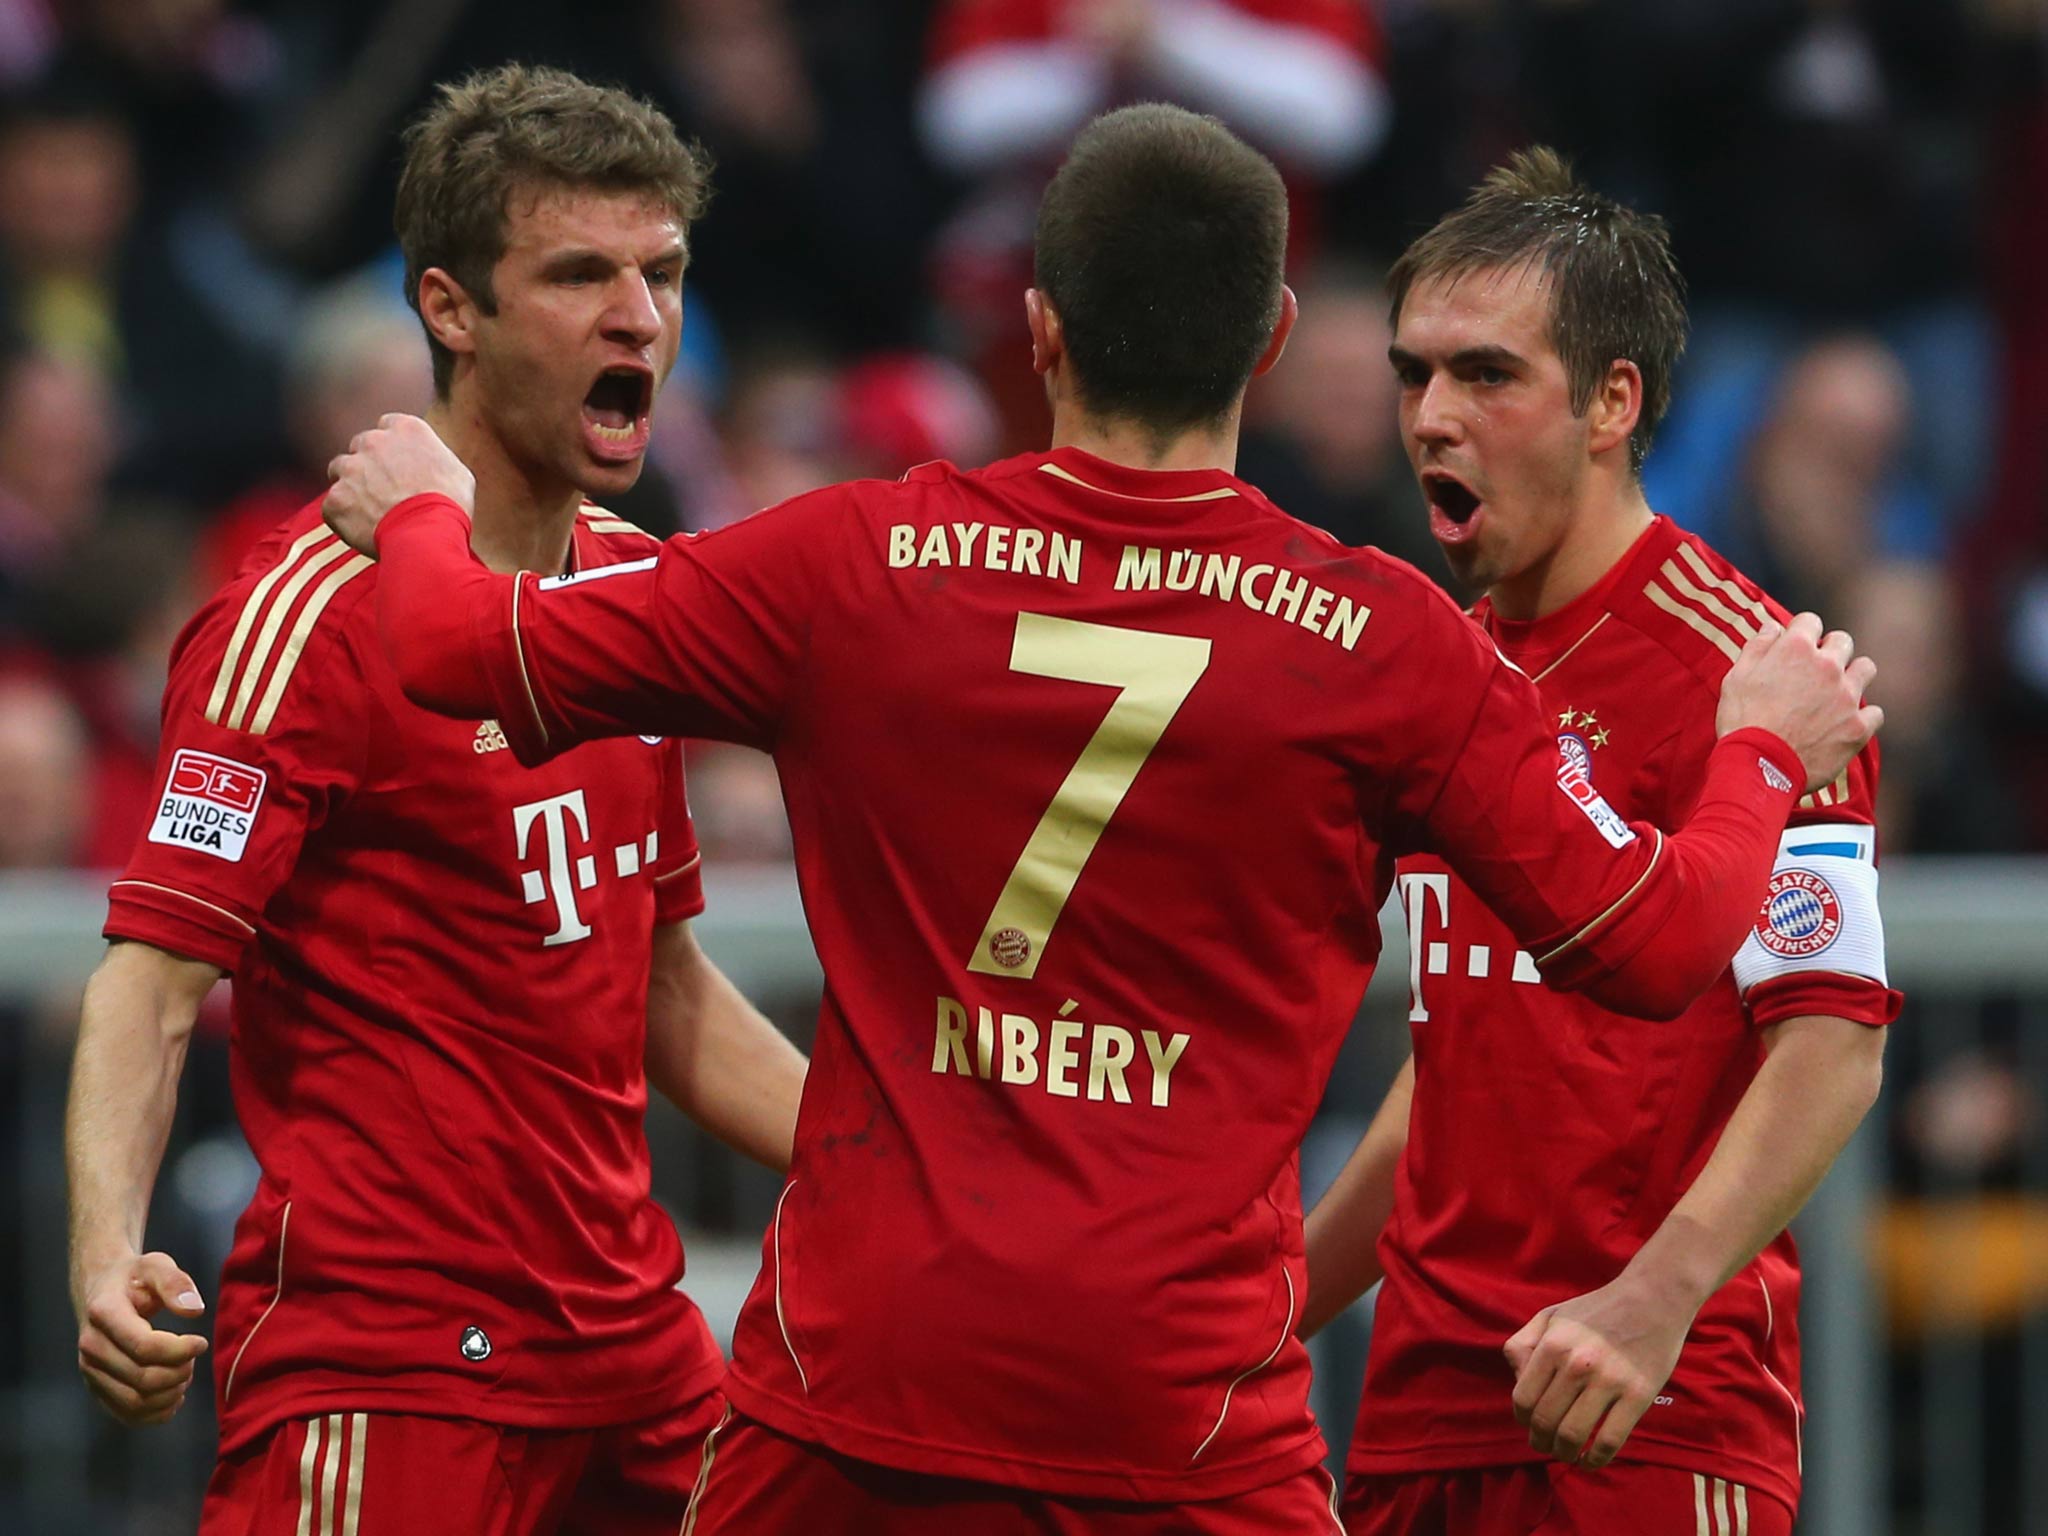 Thomas Mueller (L) of Munich celebrates scoring with his team mates Franck Ribery (C) and Philipp Lahm